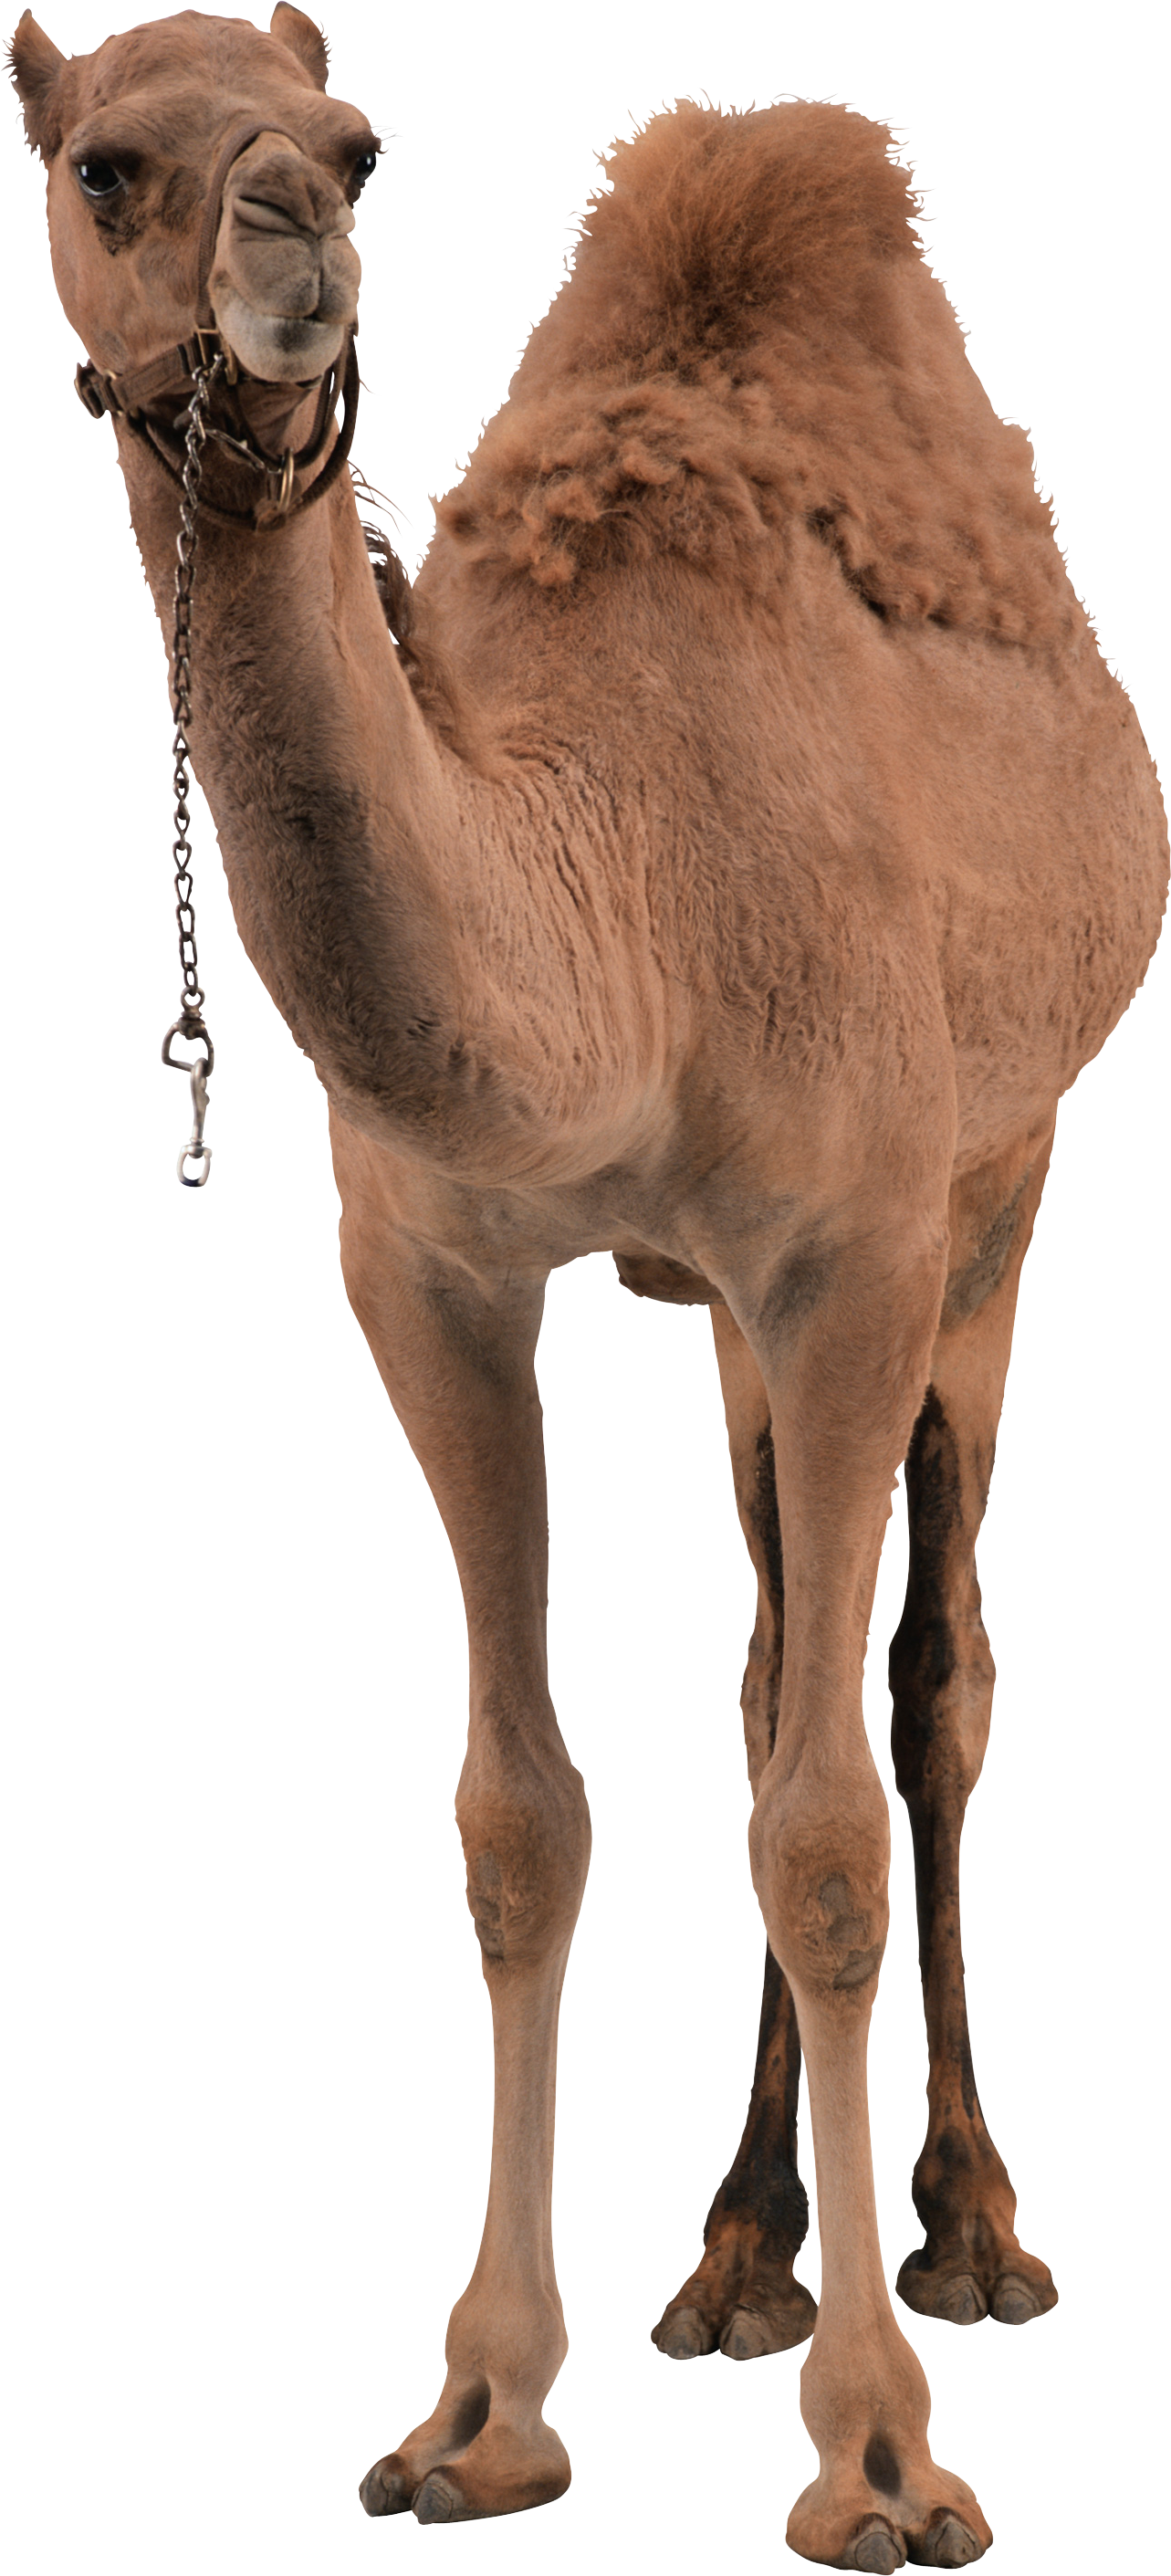 Desert Camel Standing PNG Image - PurePNG | Free transparent CC0 PNG ...